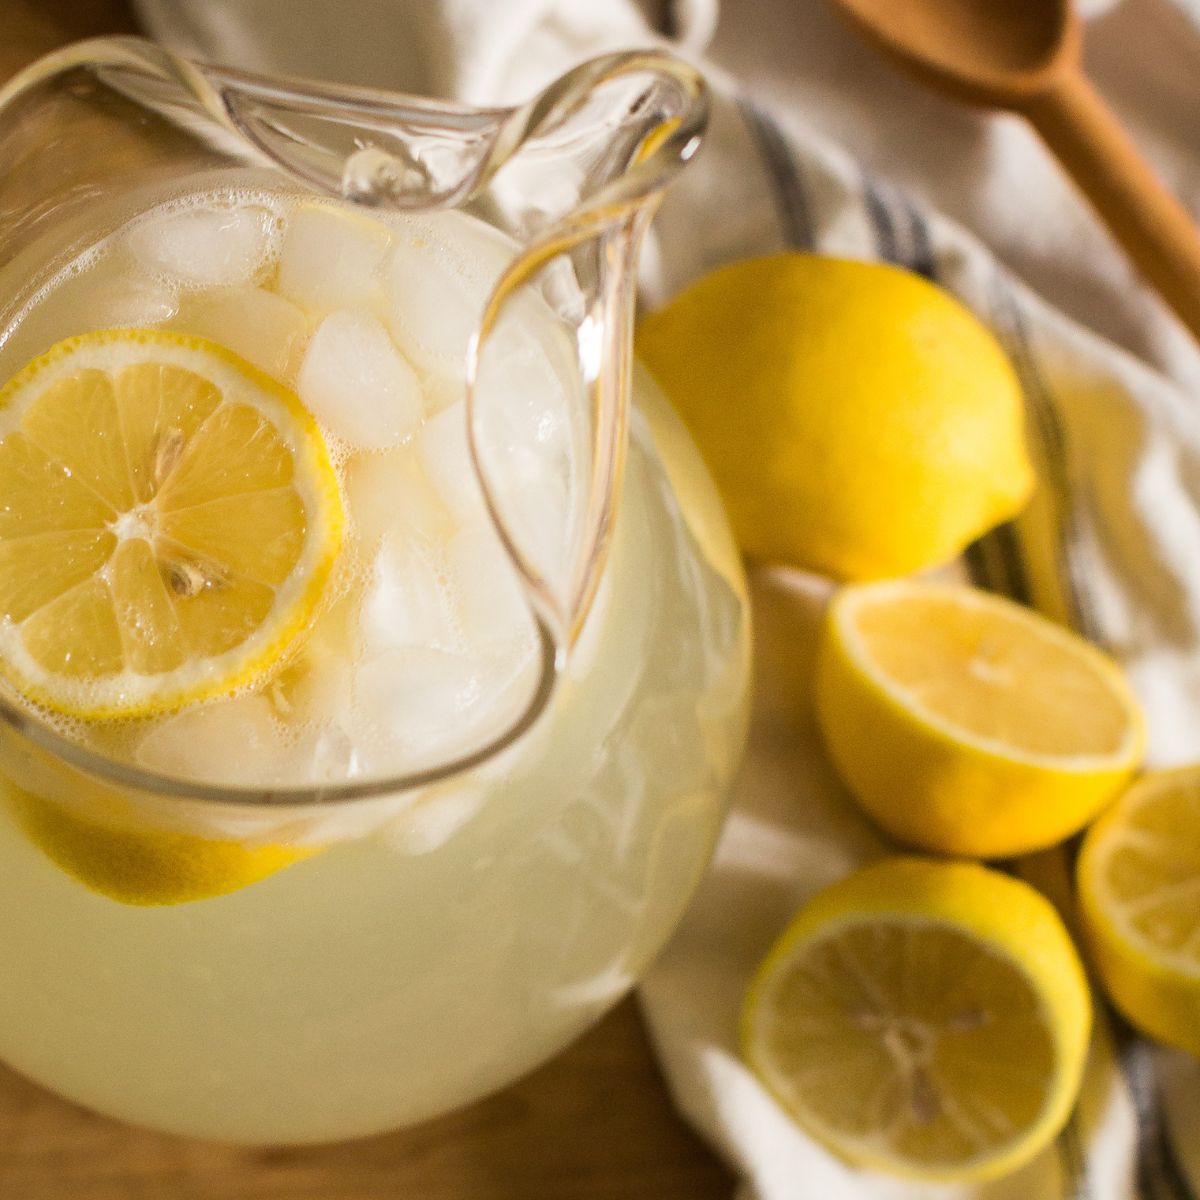 How to Make Southern Sweet Homemade Lemonade